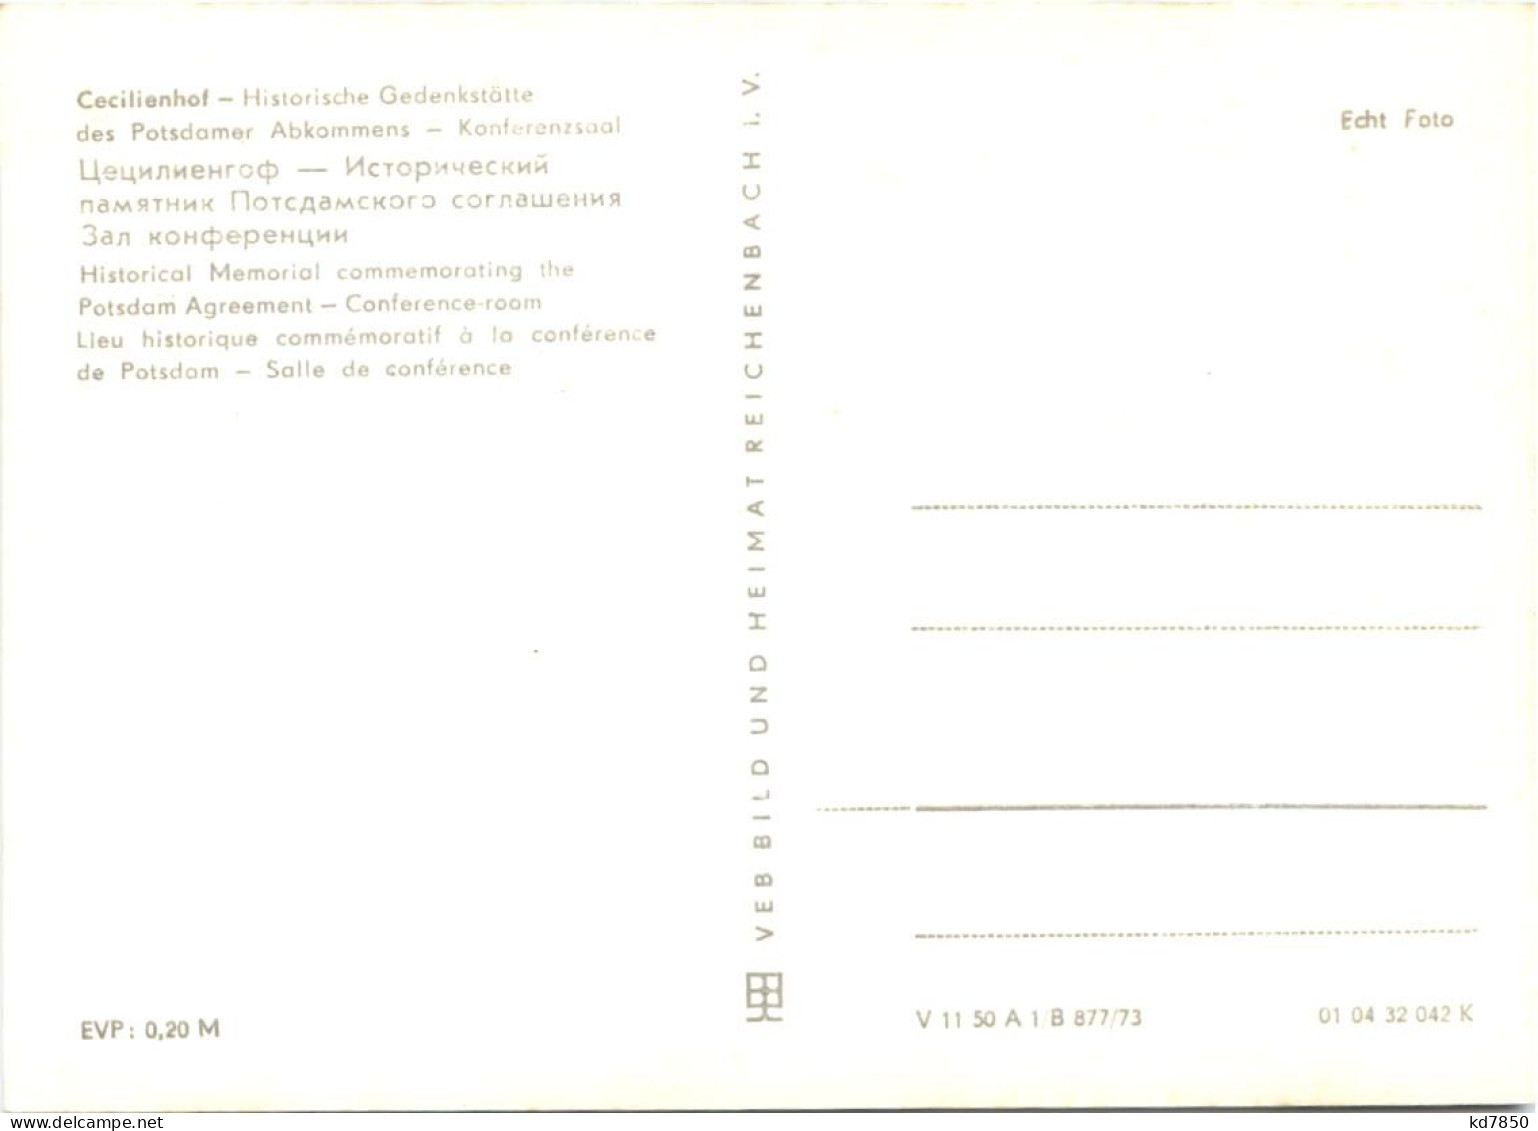 Cecilienhof - Potsdamer Abkommen, Konferenzsaal - Potsdam